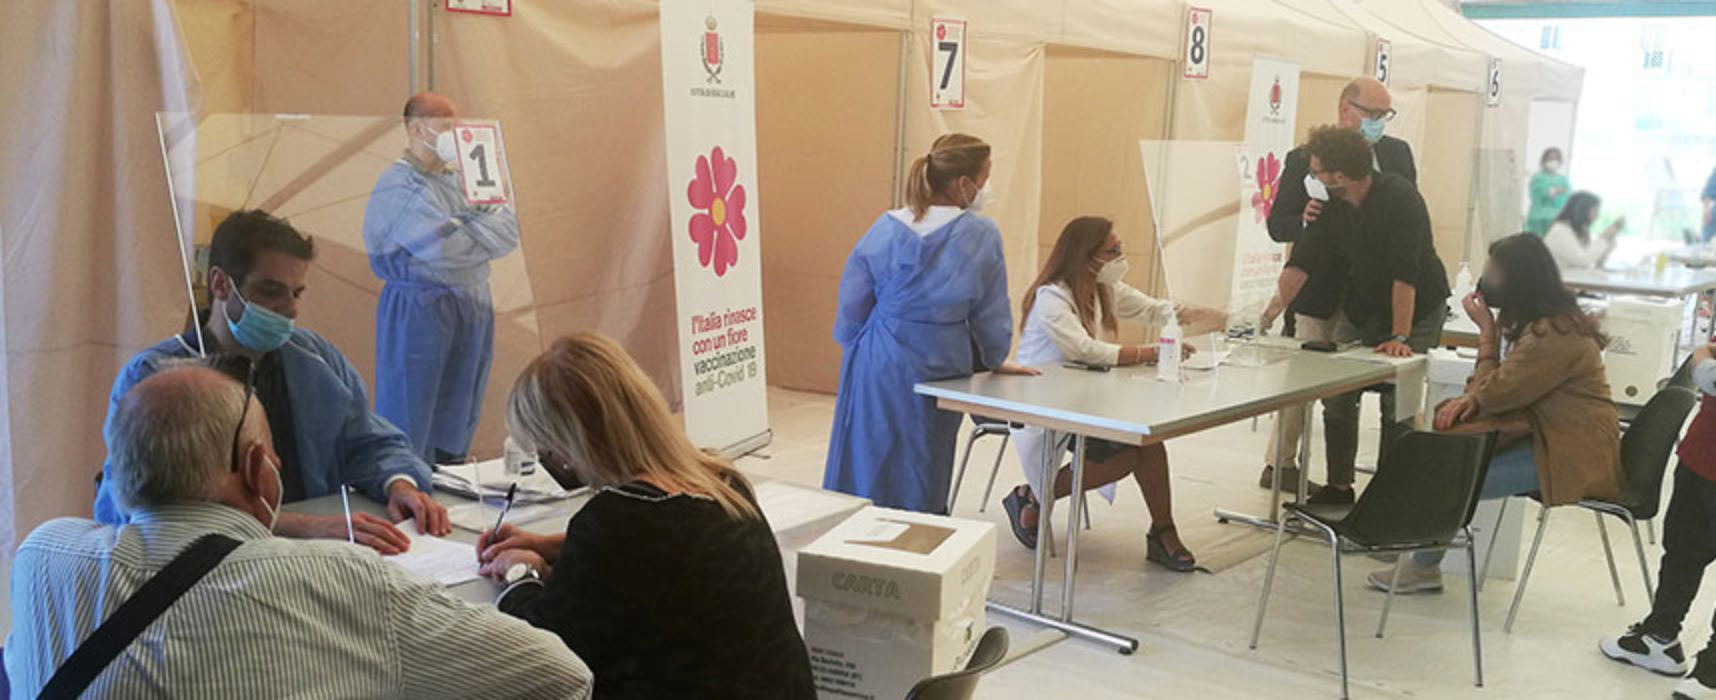 Campagna vaccinale anti-Covid procede a ritmi elevati in Puglia